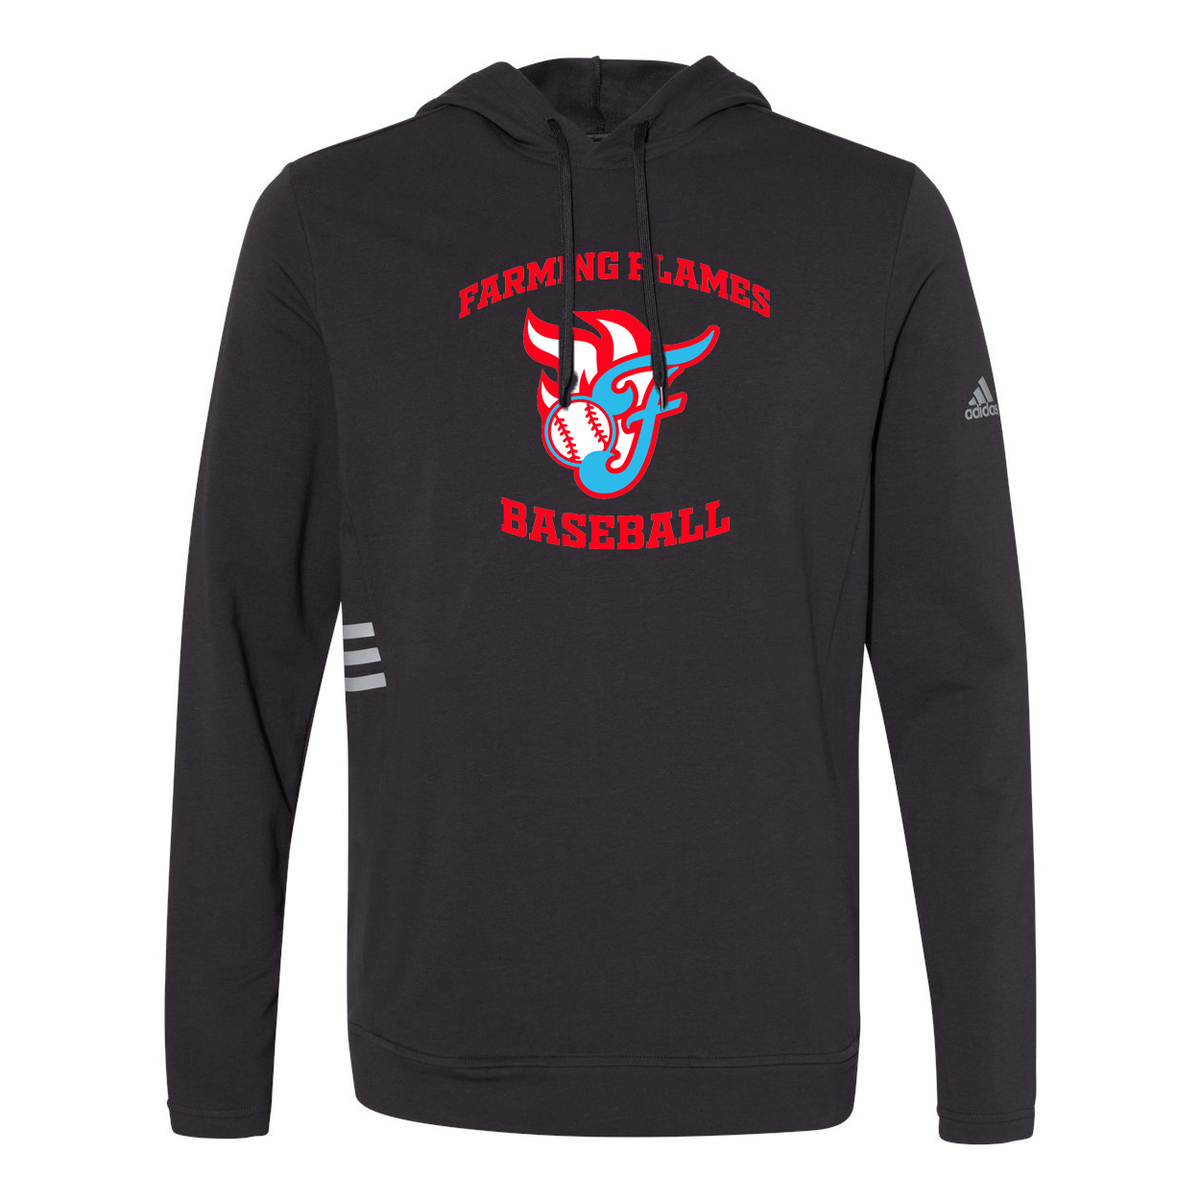 Farming Flames Baseball Club Adidas Lightweight Sweatshirt